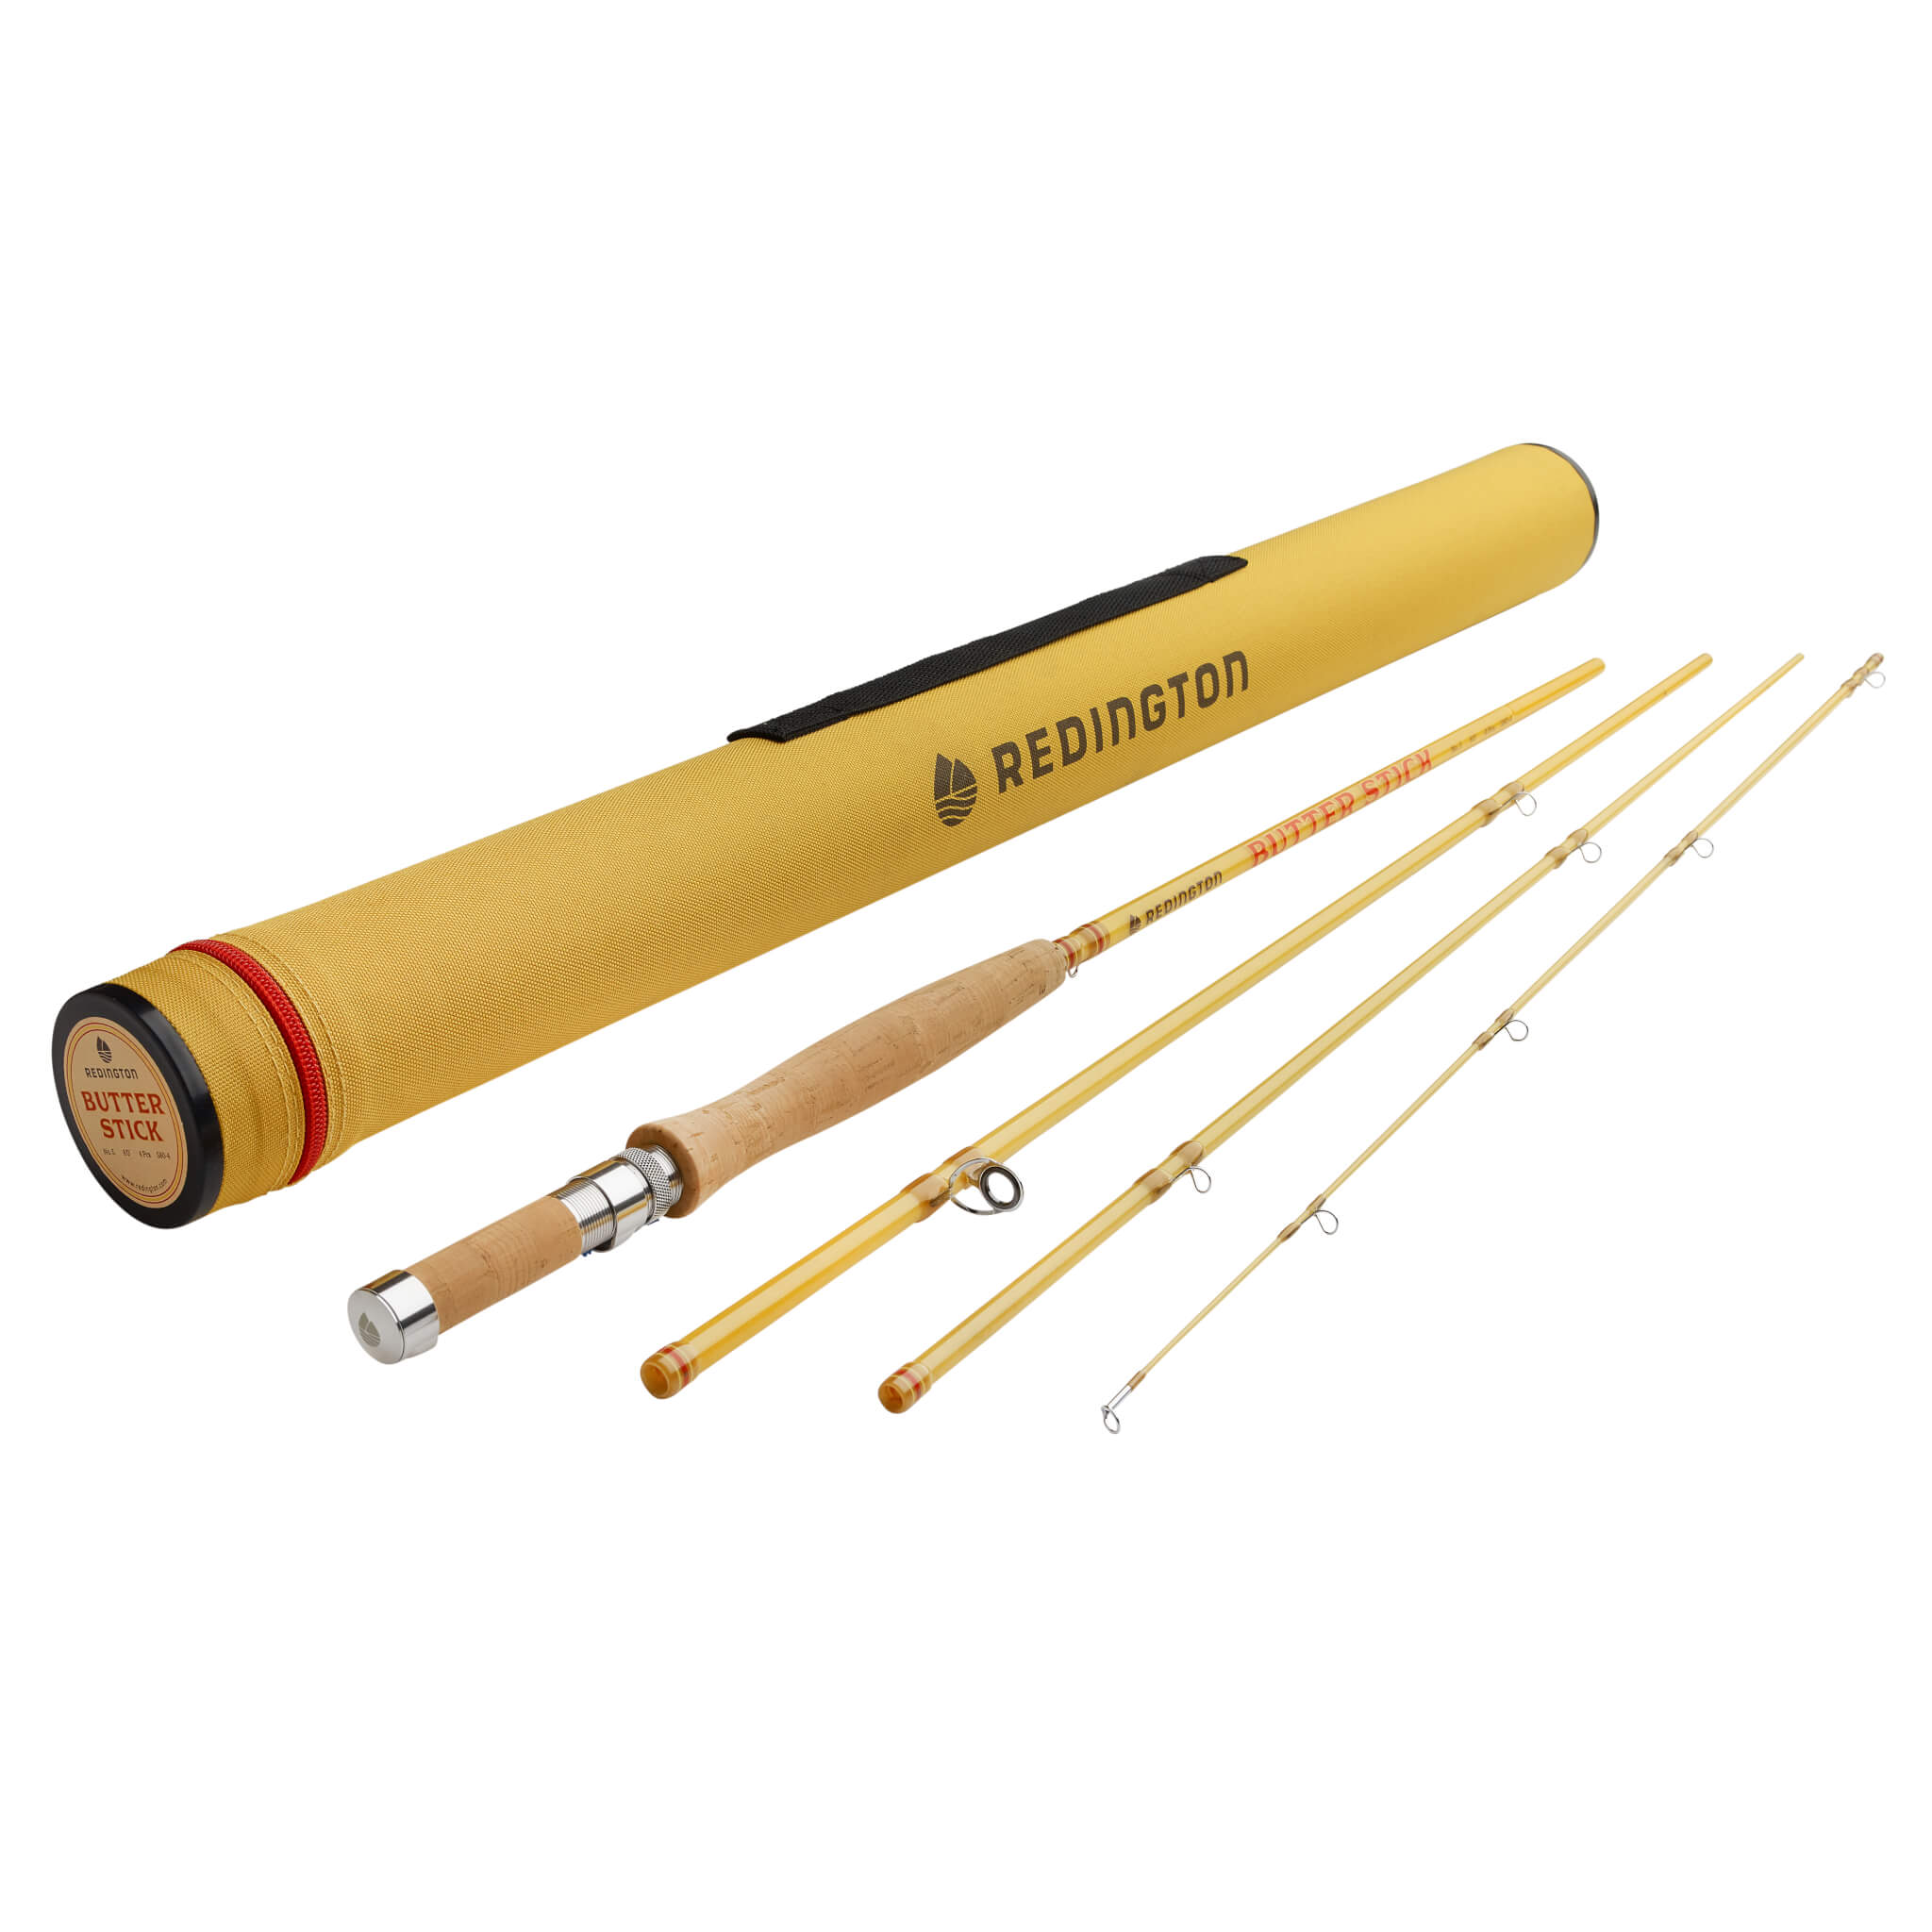 Redington Butter Stick Fly Rod – Guide Flyfishing, Fly Fishing Rods, Reels, Sage, Redington, RIO